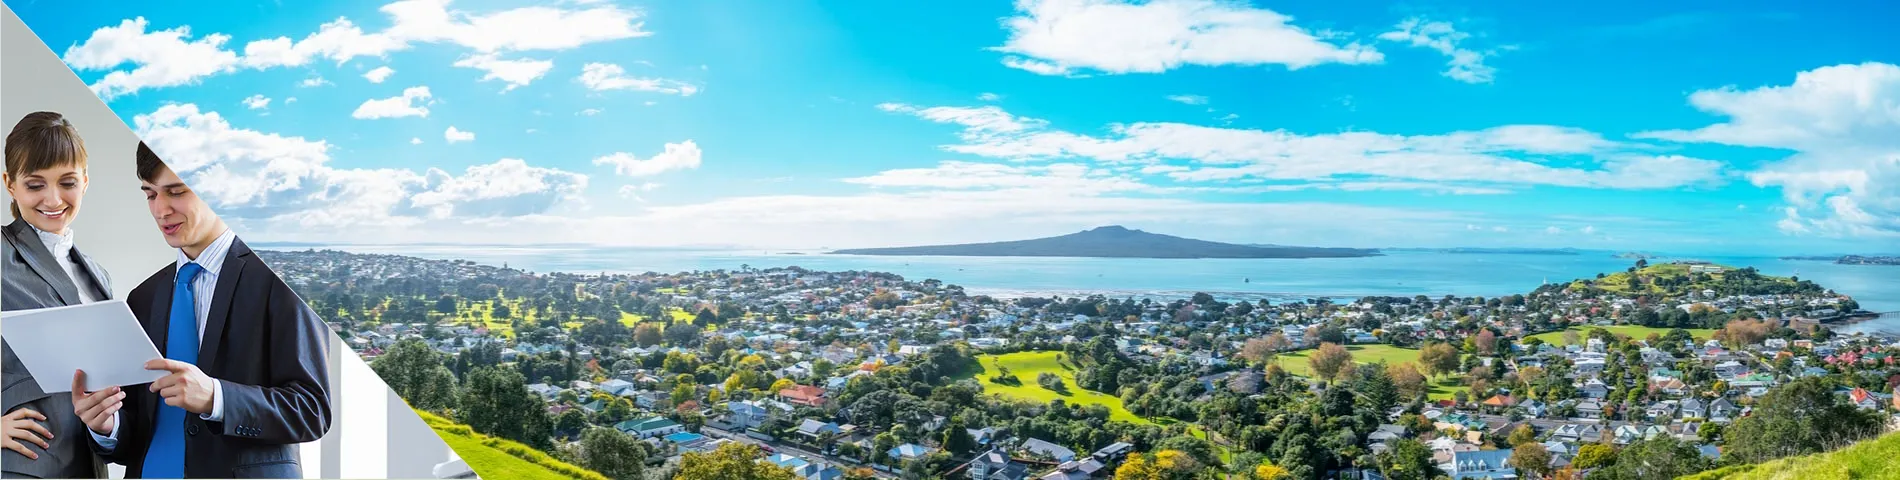 Auckland - Negócios Individual